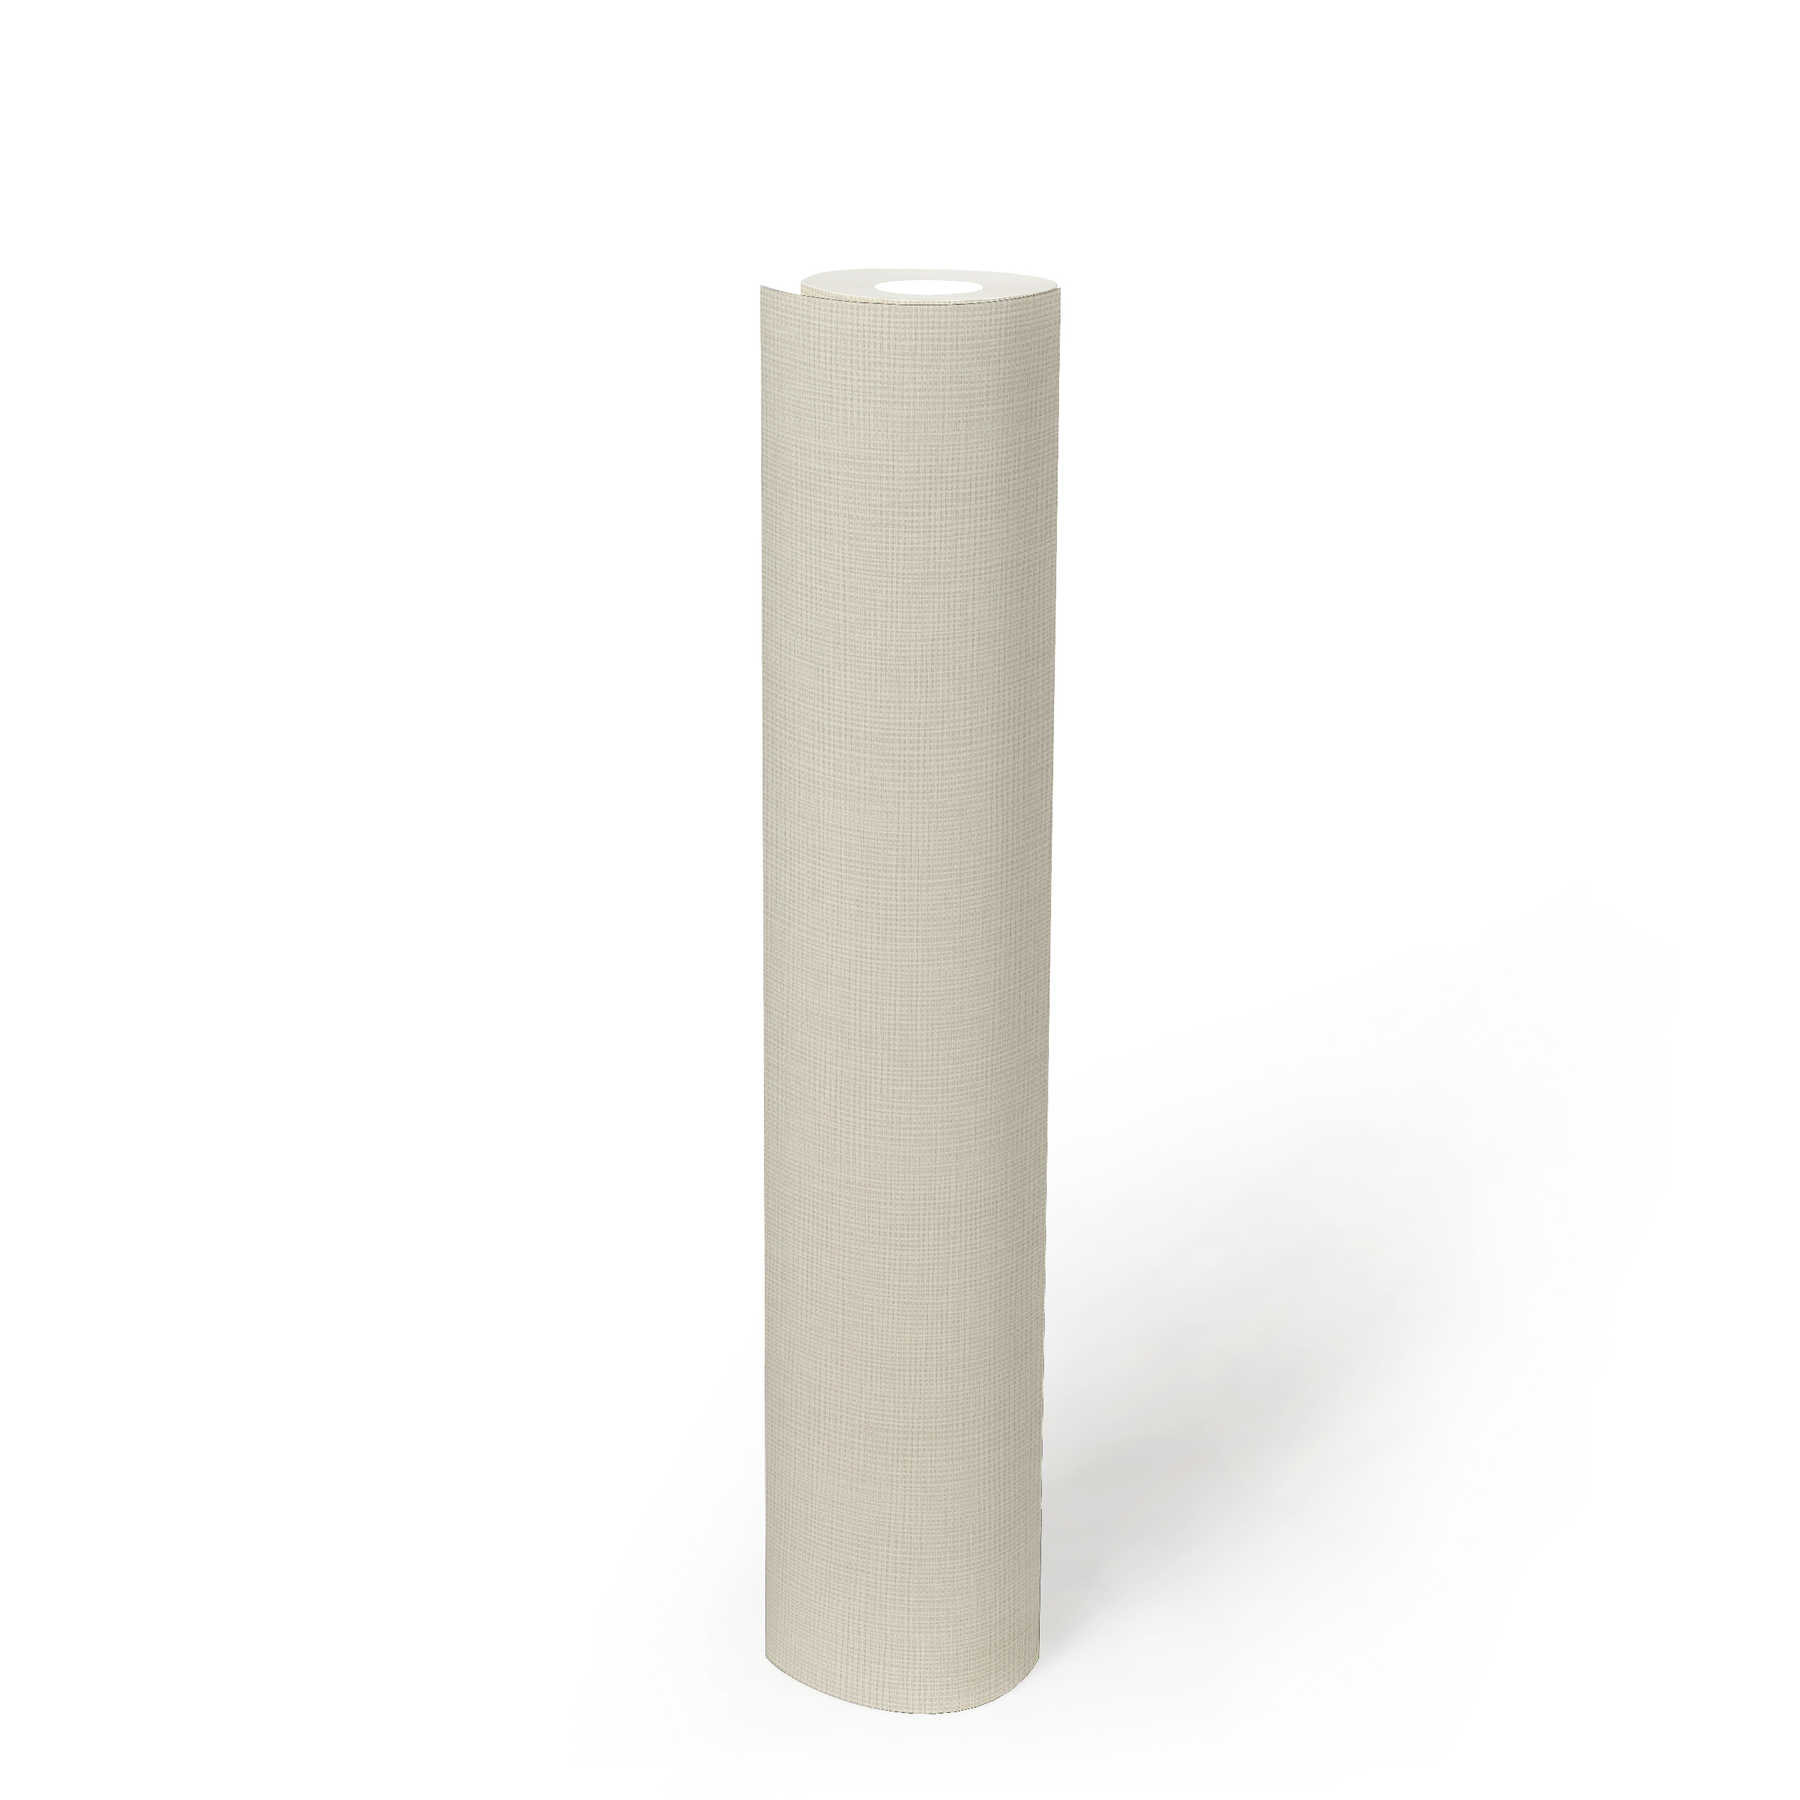             Non-woven wallpaper cream matte ivory with textile texture
        